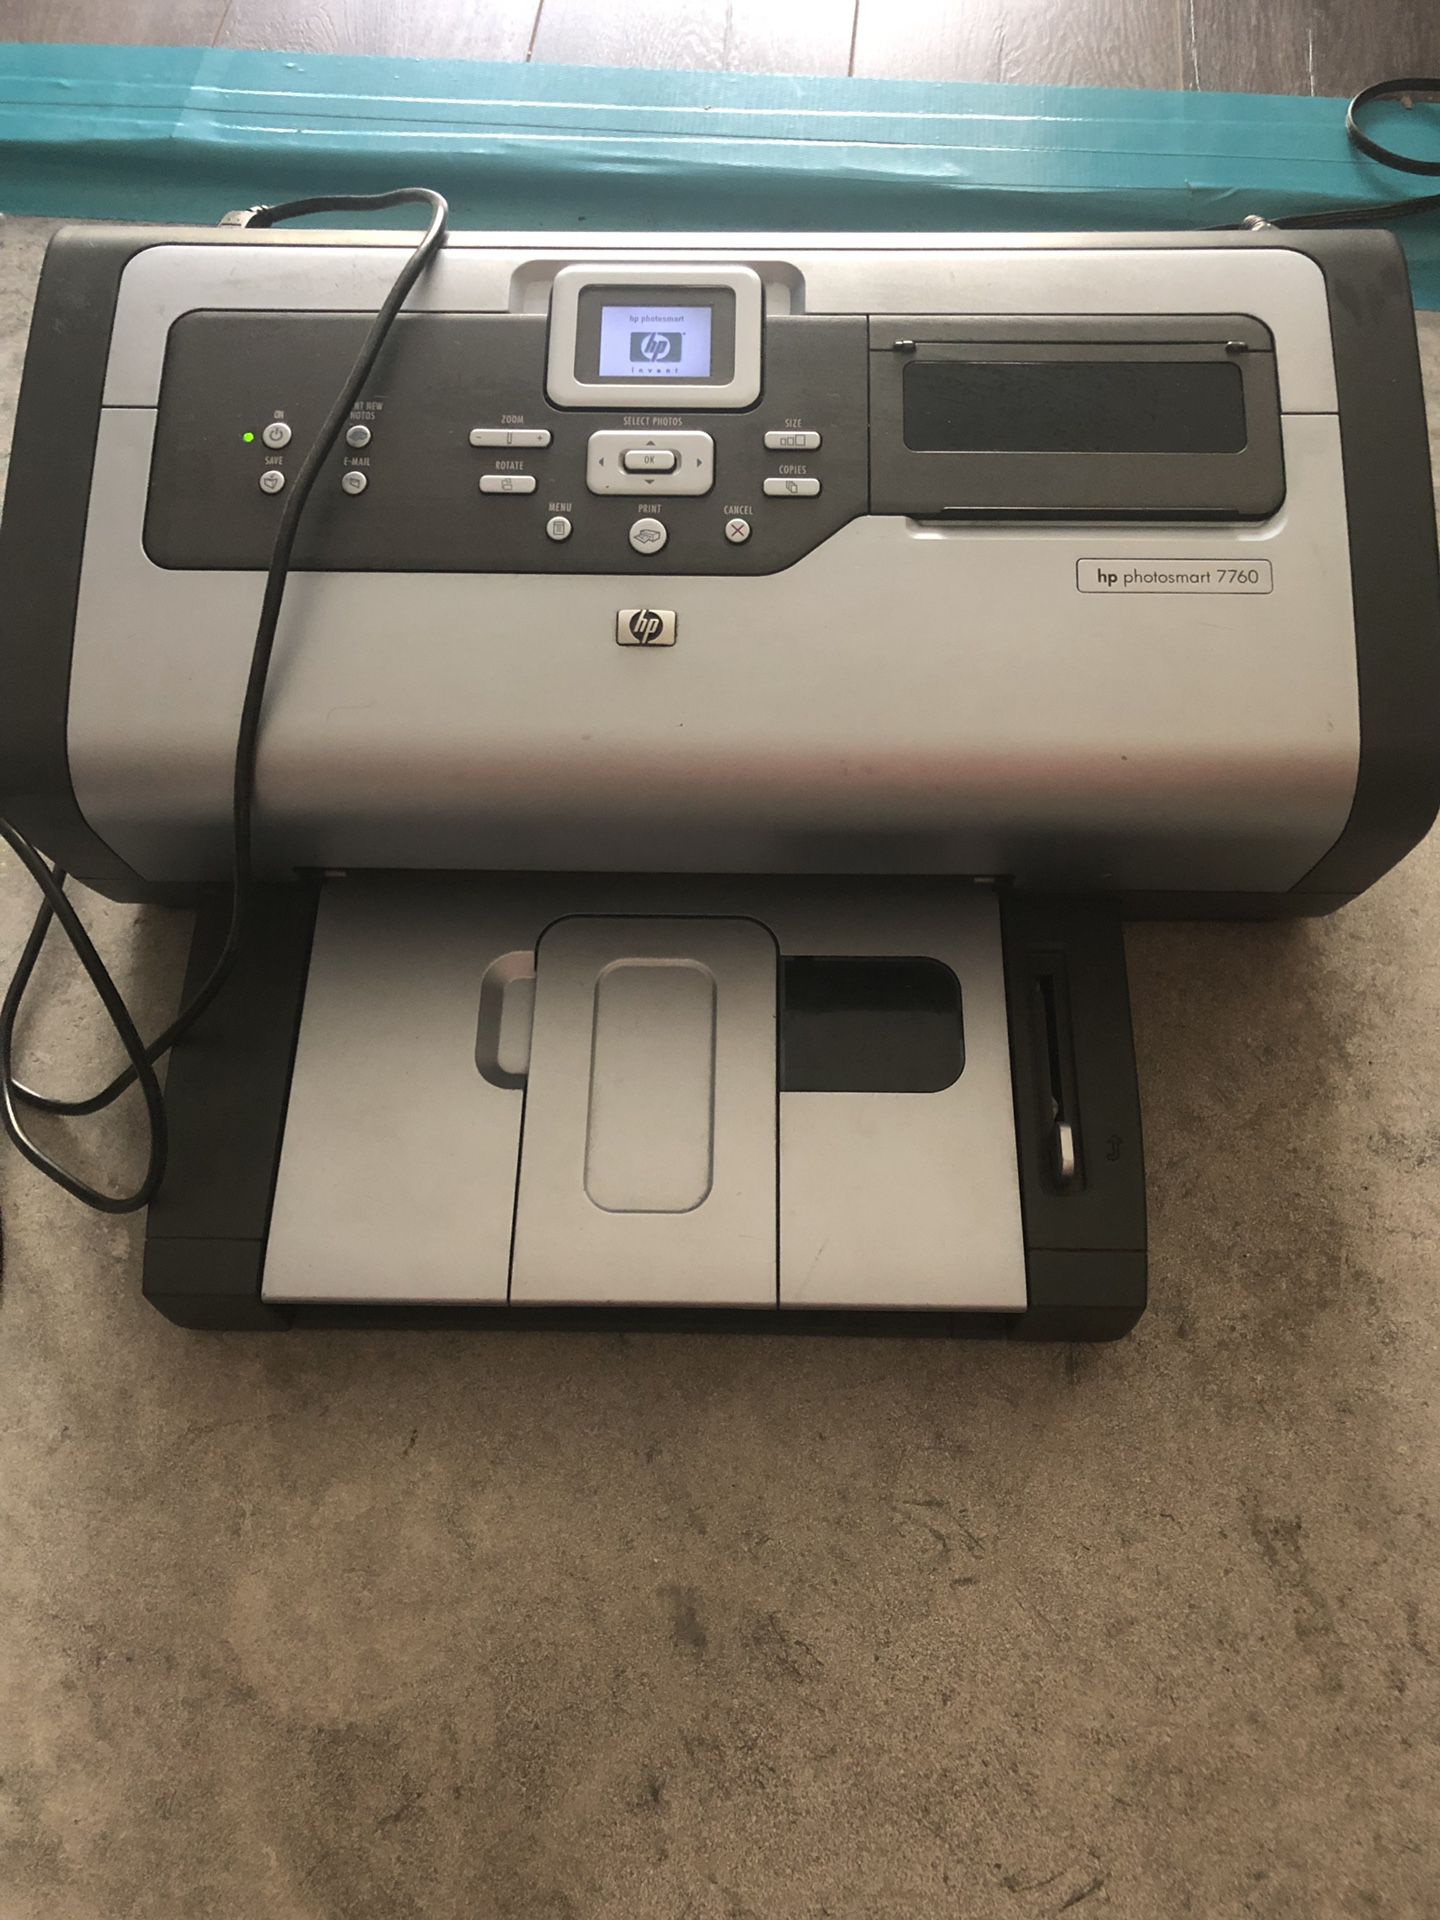 HP photosmart 7760 printer